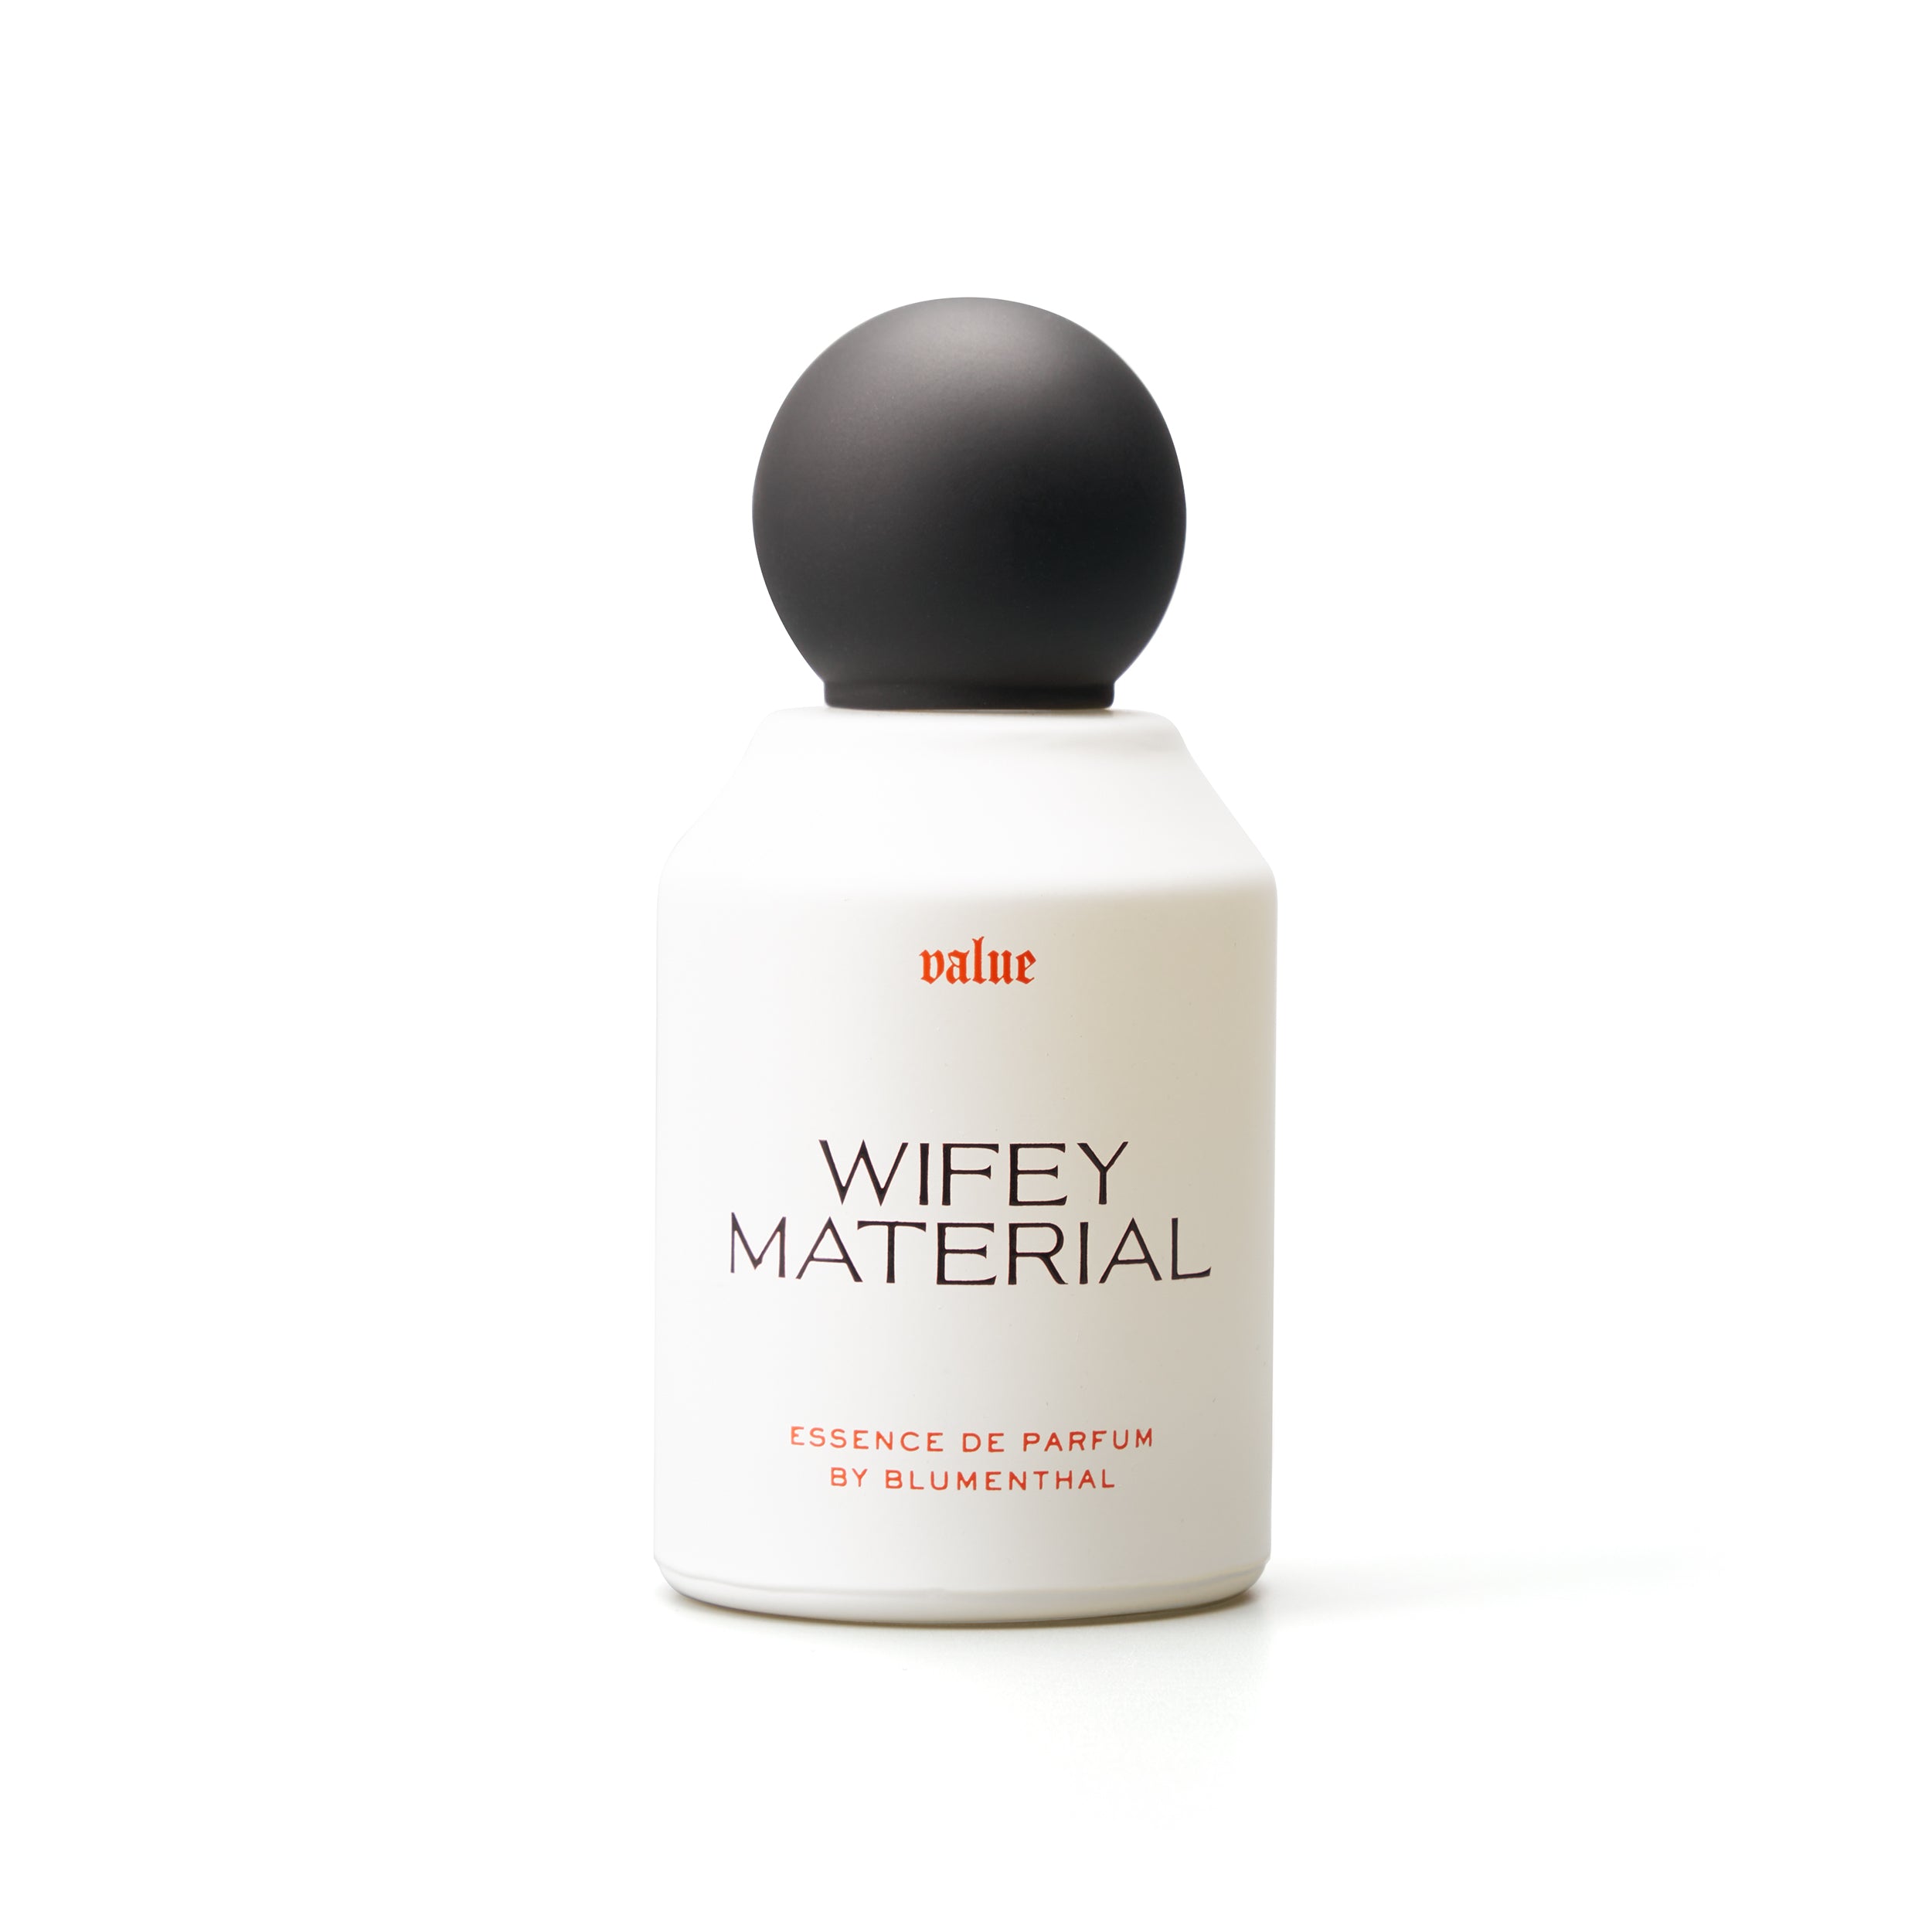 "Wifey Material" Essence de Parfum